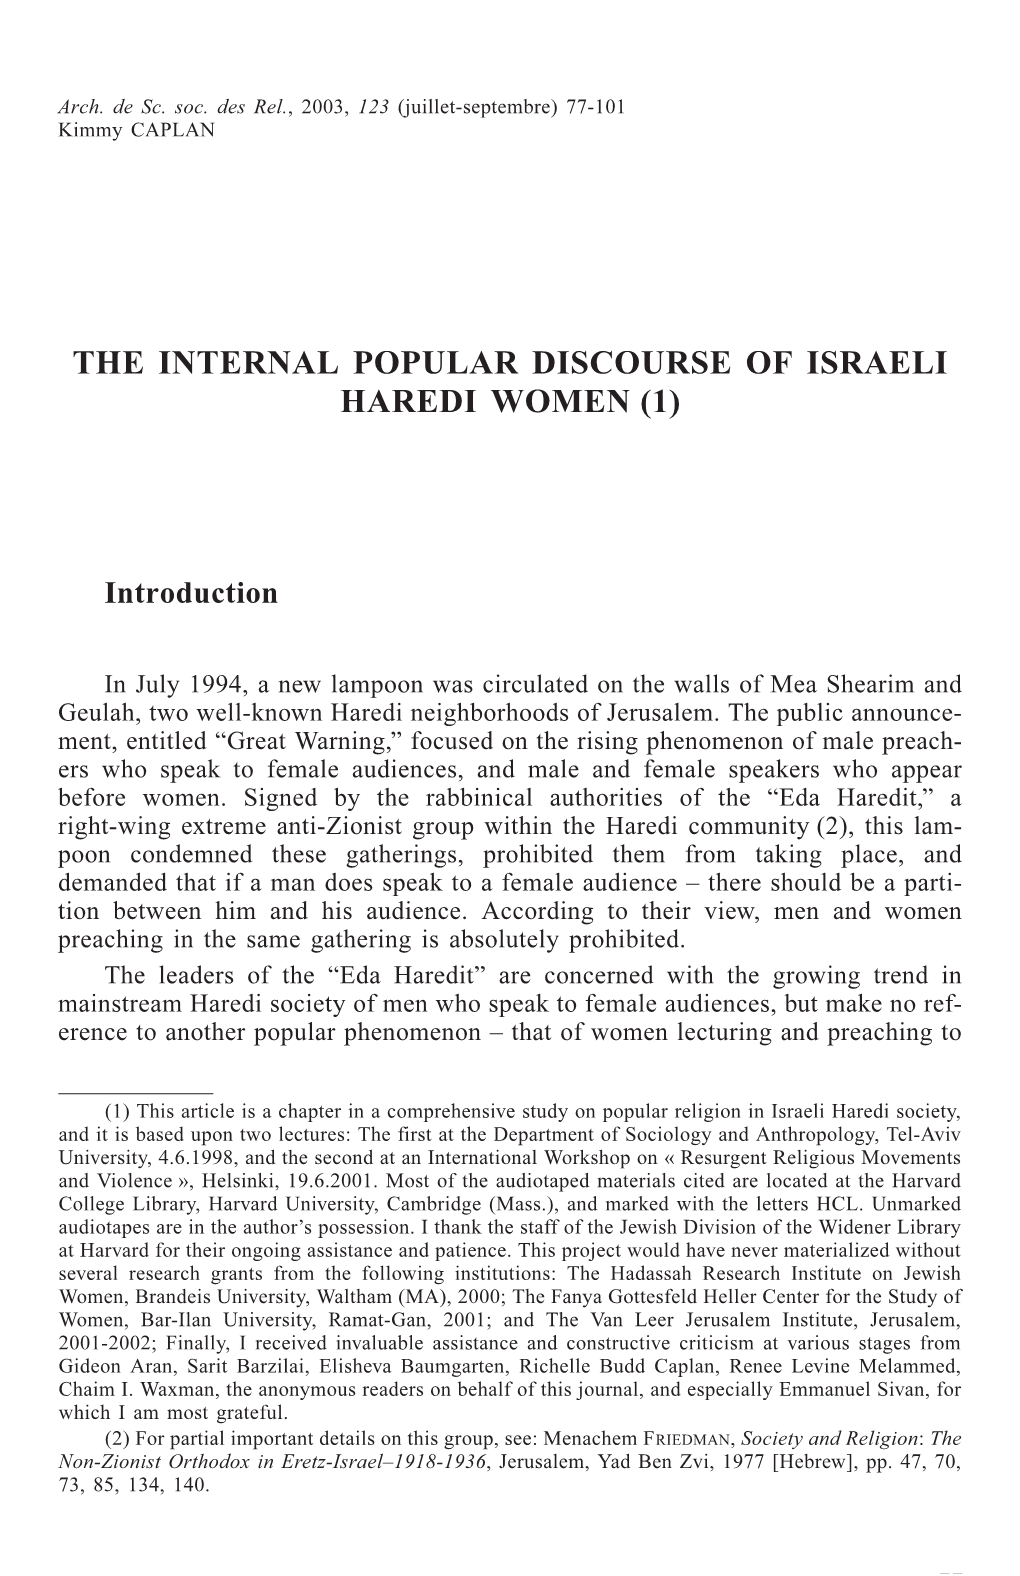 The Internal Popular Discourse of Israeli Haredi Women